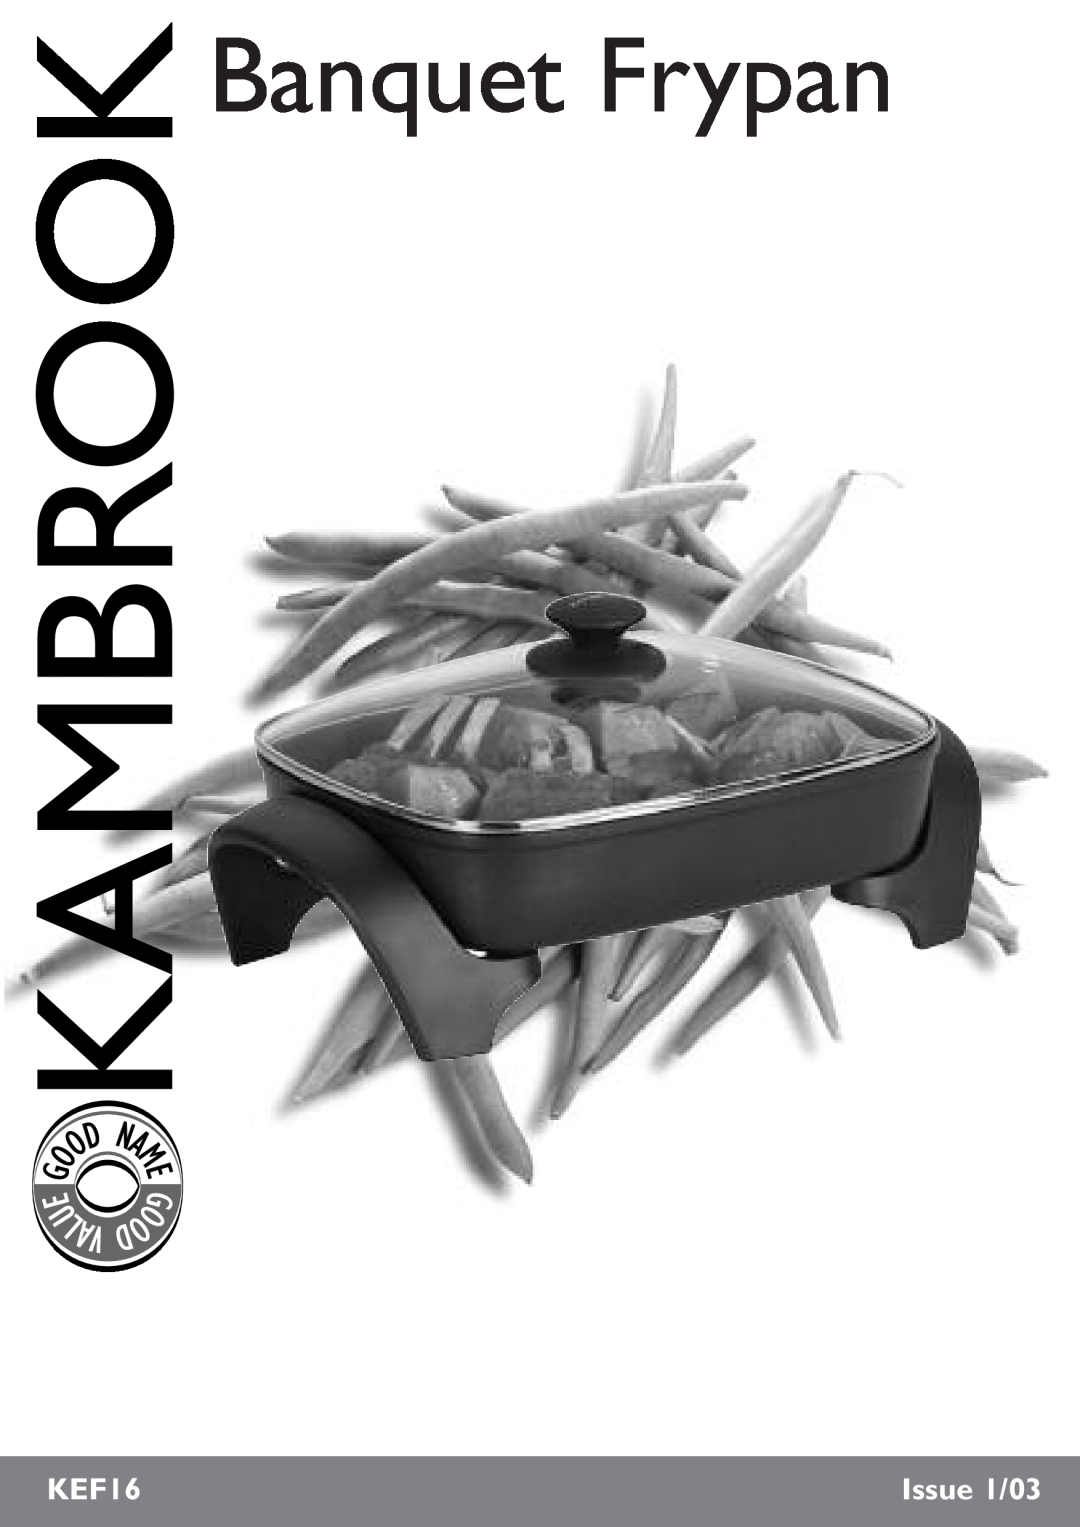 Kambrook KEF16 manual U Lav, Banquet Frypan, Issue 1/03 